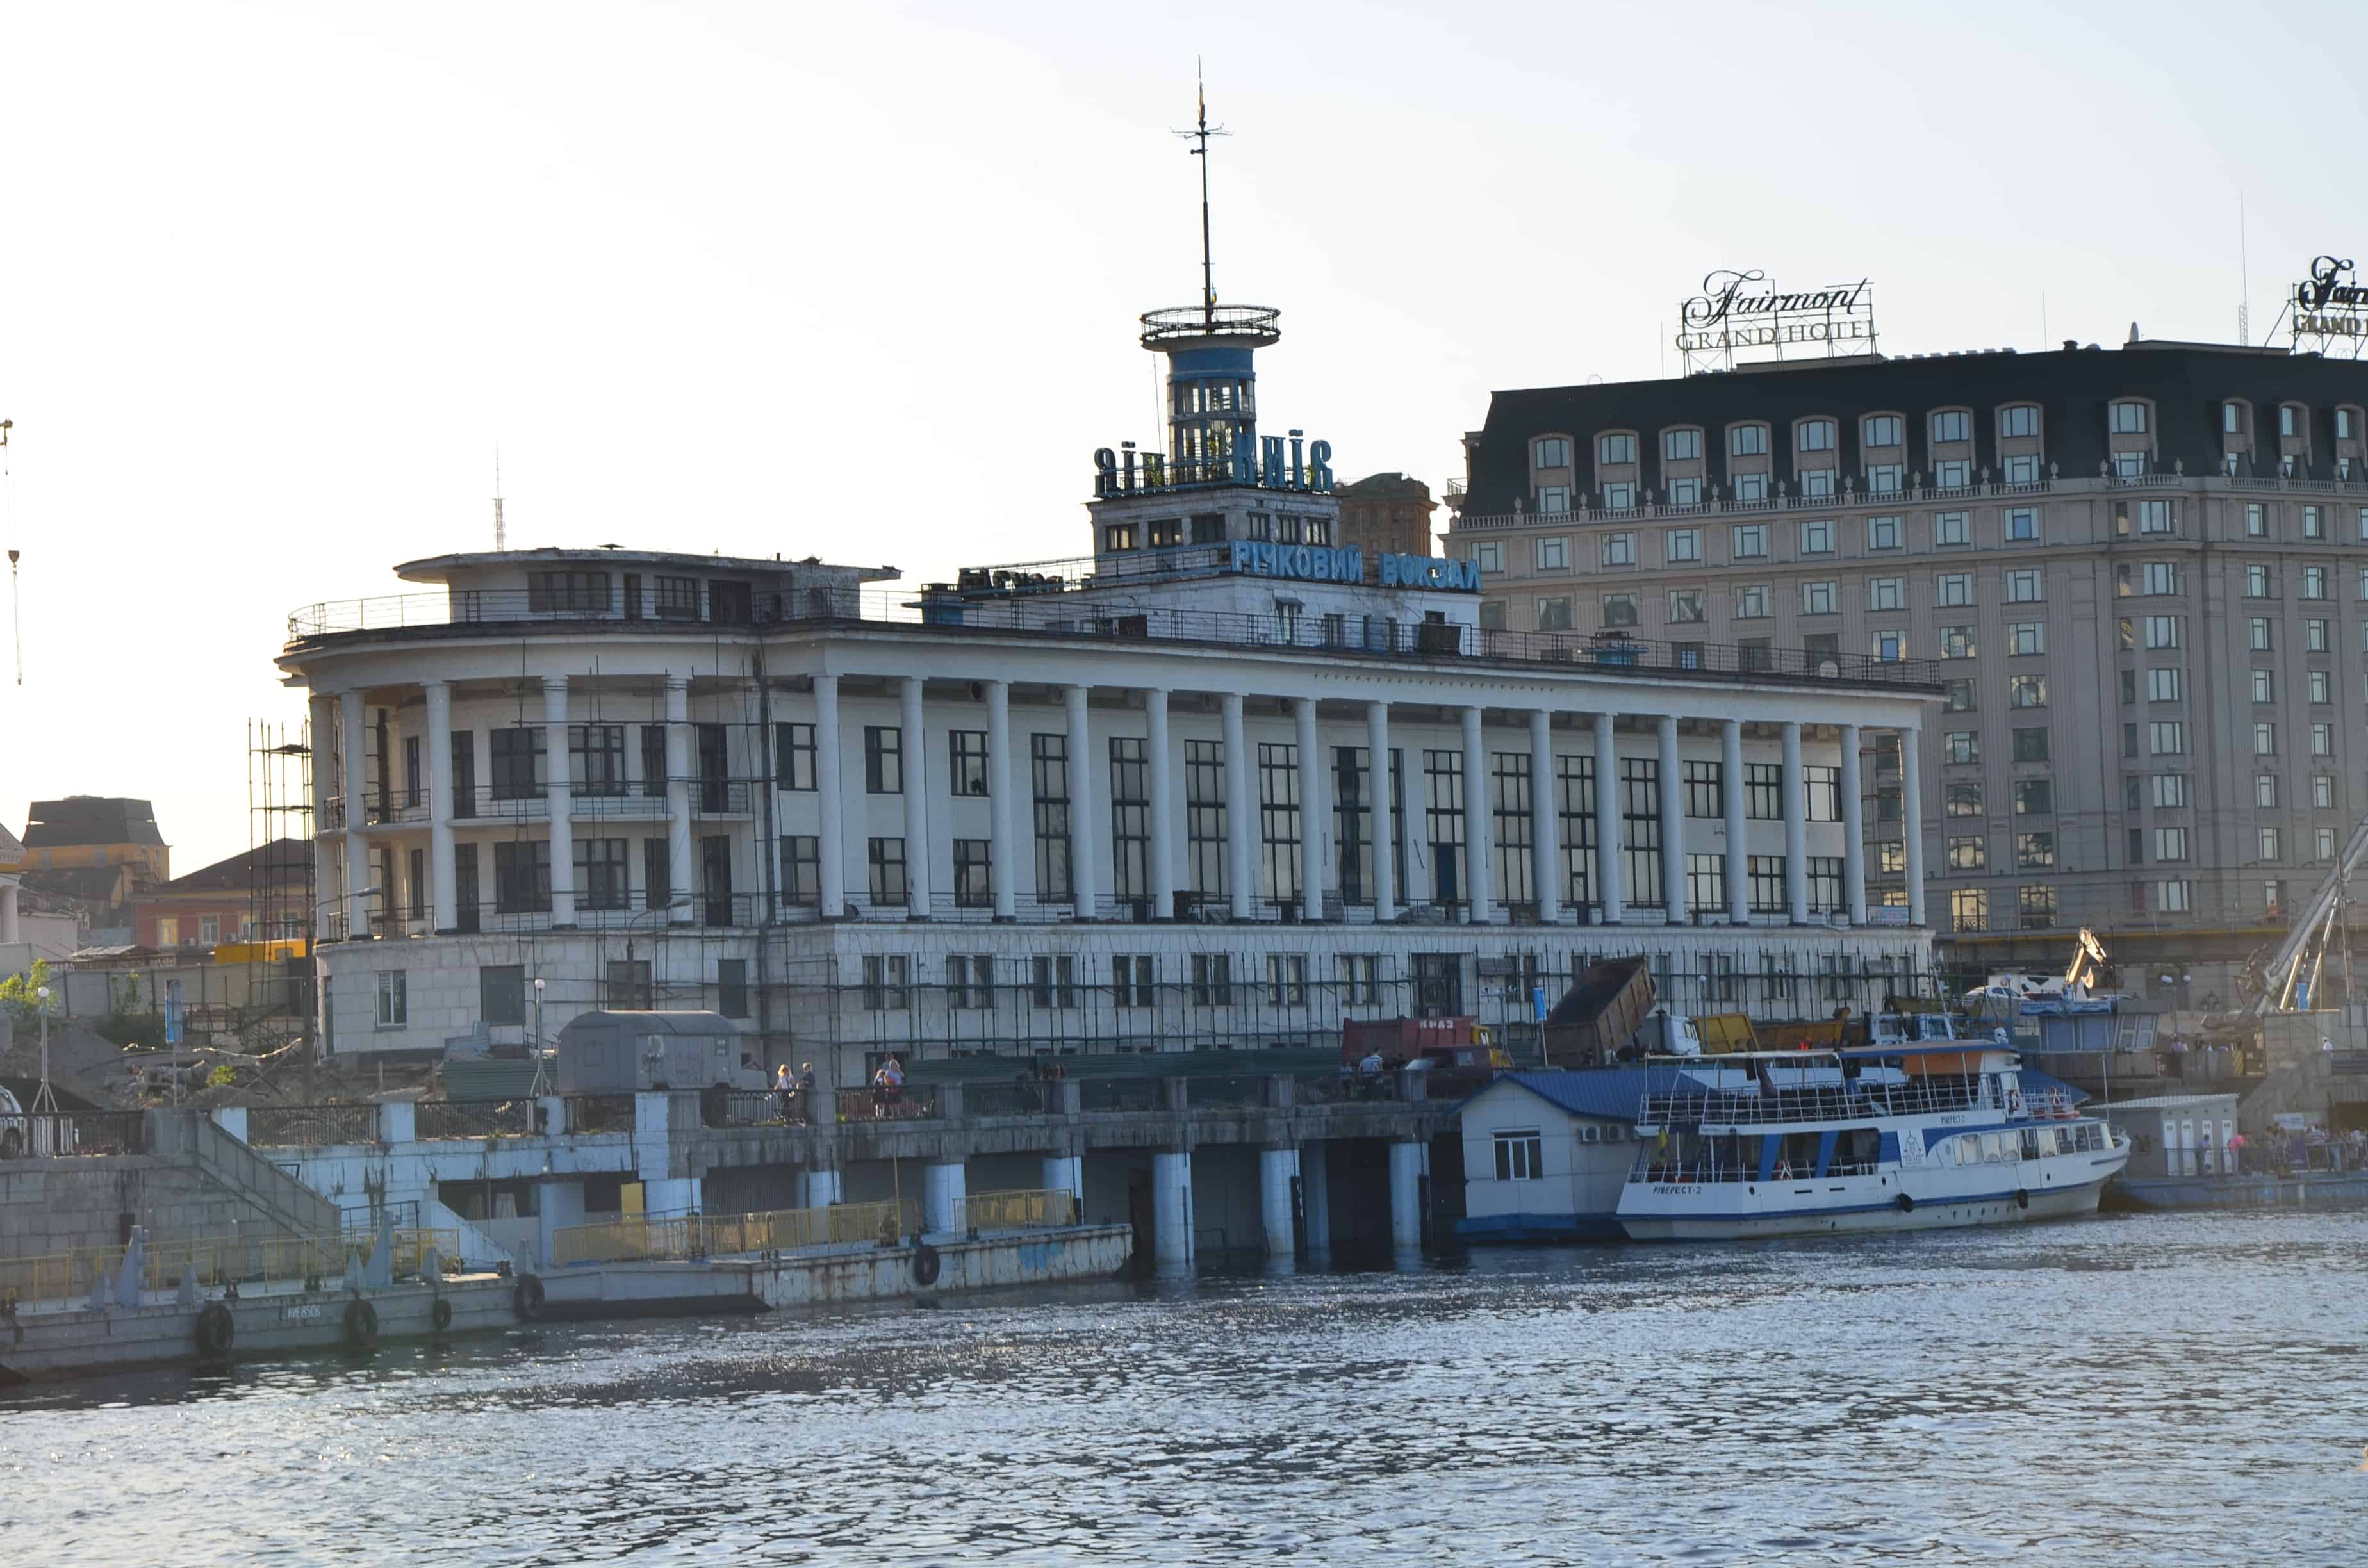 Kyiv River Port on the Dnieper River cruise in Kyiv, Ukraine